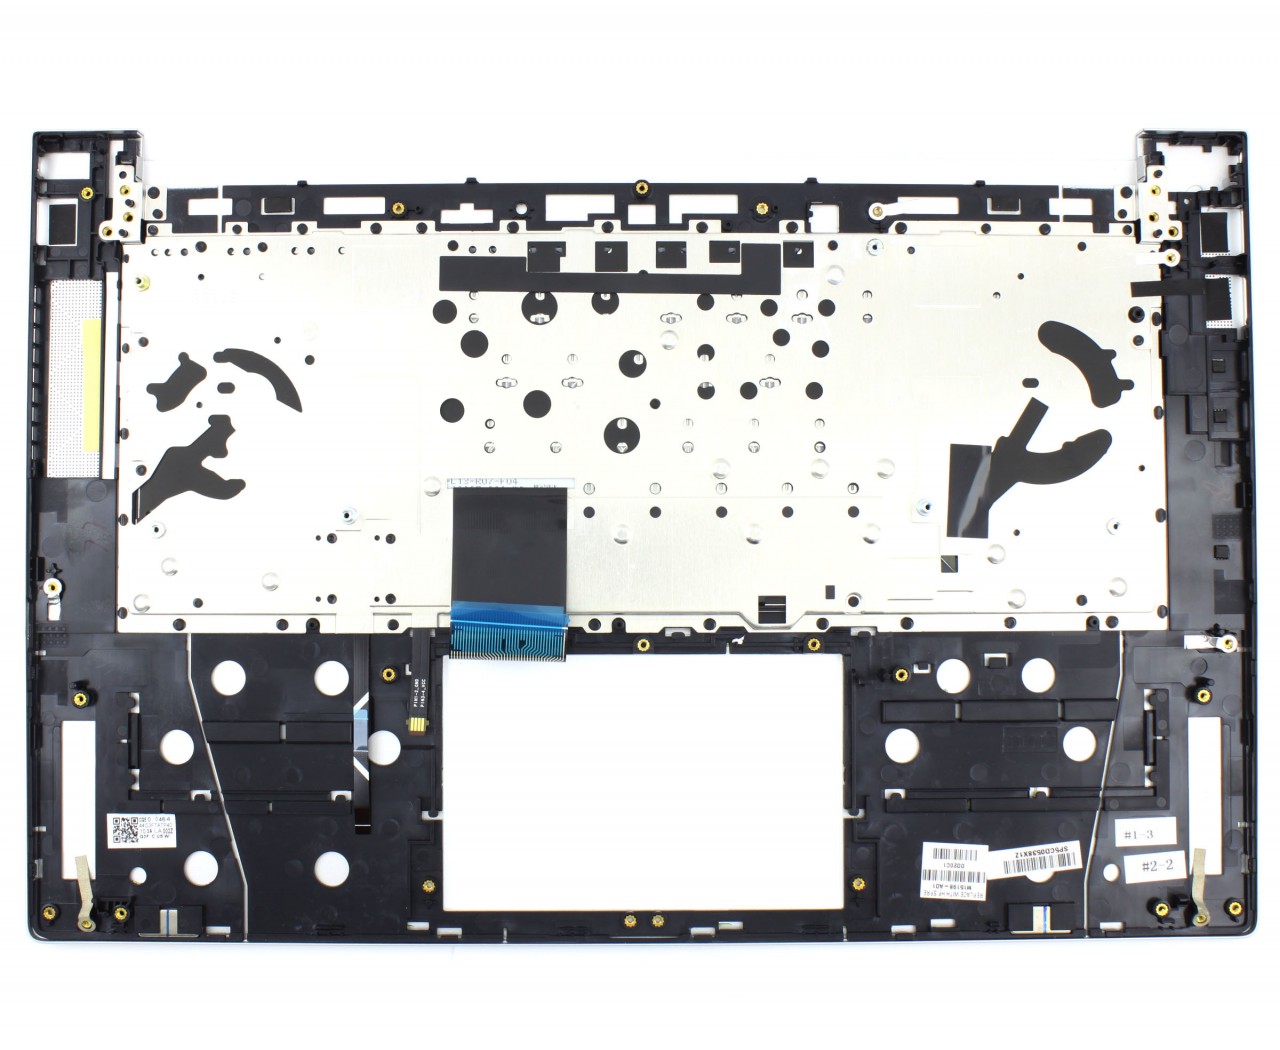 Tastatura HP M15198-AD1 Argintie cu Palmrest Argintiu si Amprenta iluminata backlit image3